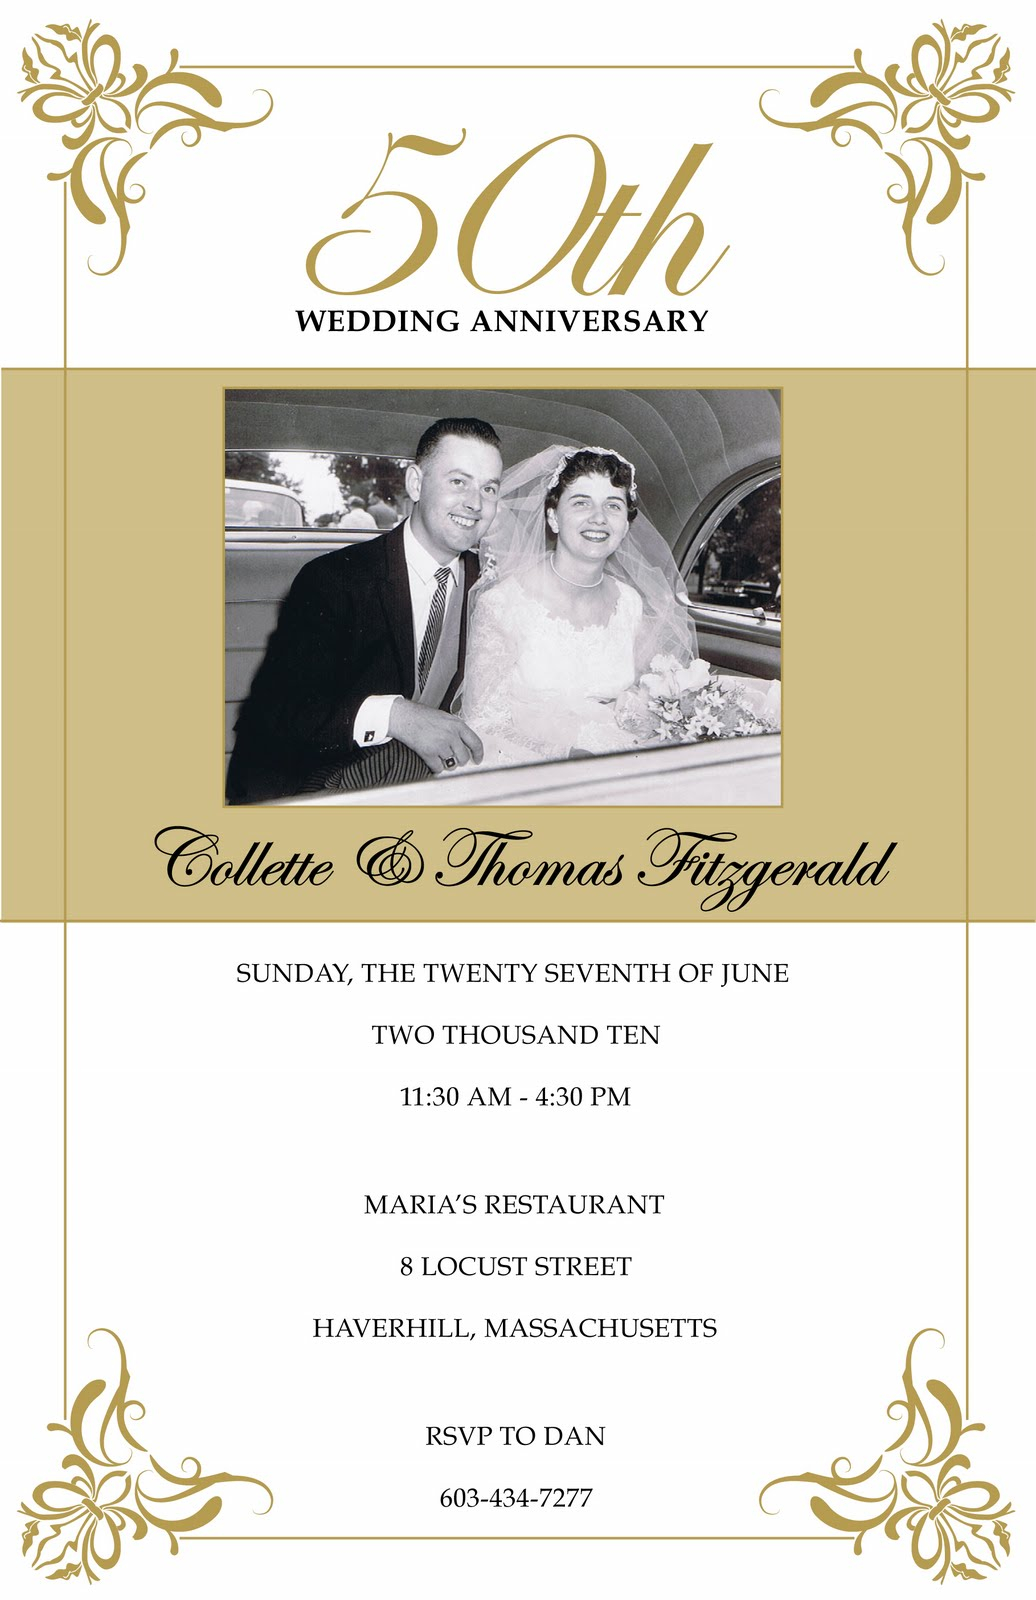 50th-wedding-anniversary-invitations-templates-business-template-ideas